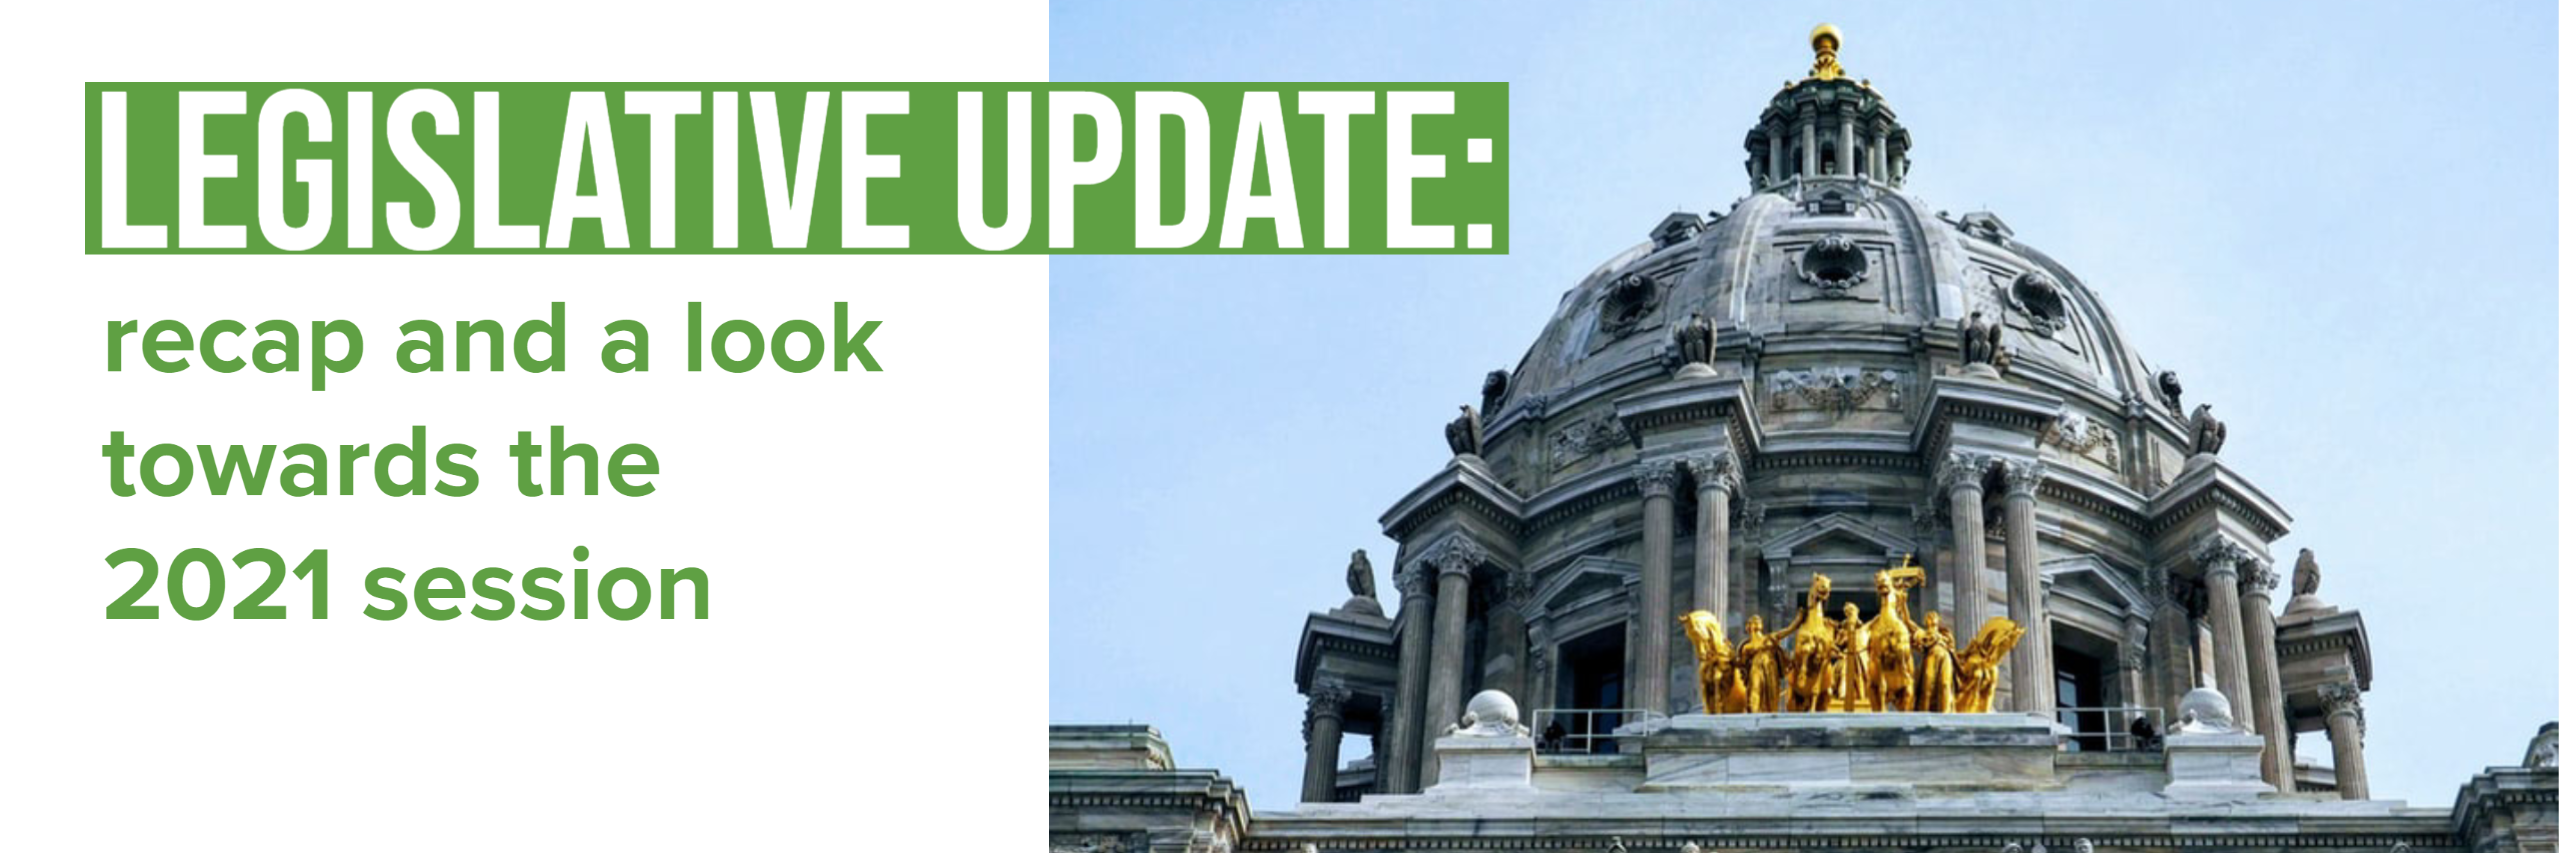 Legislative Update: recap and a look towards the 2021 session